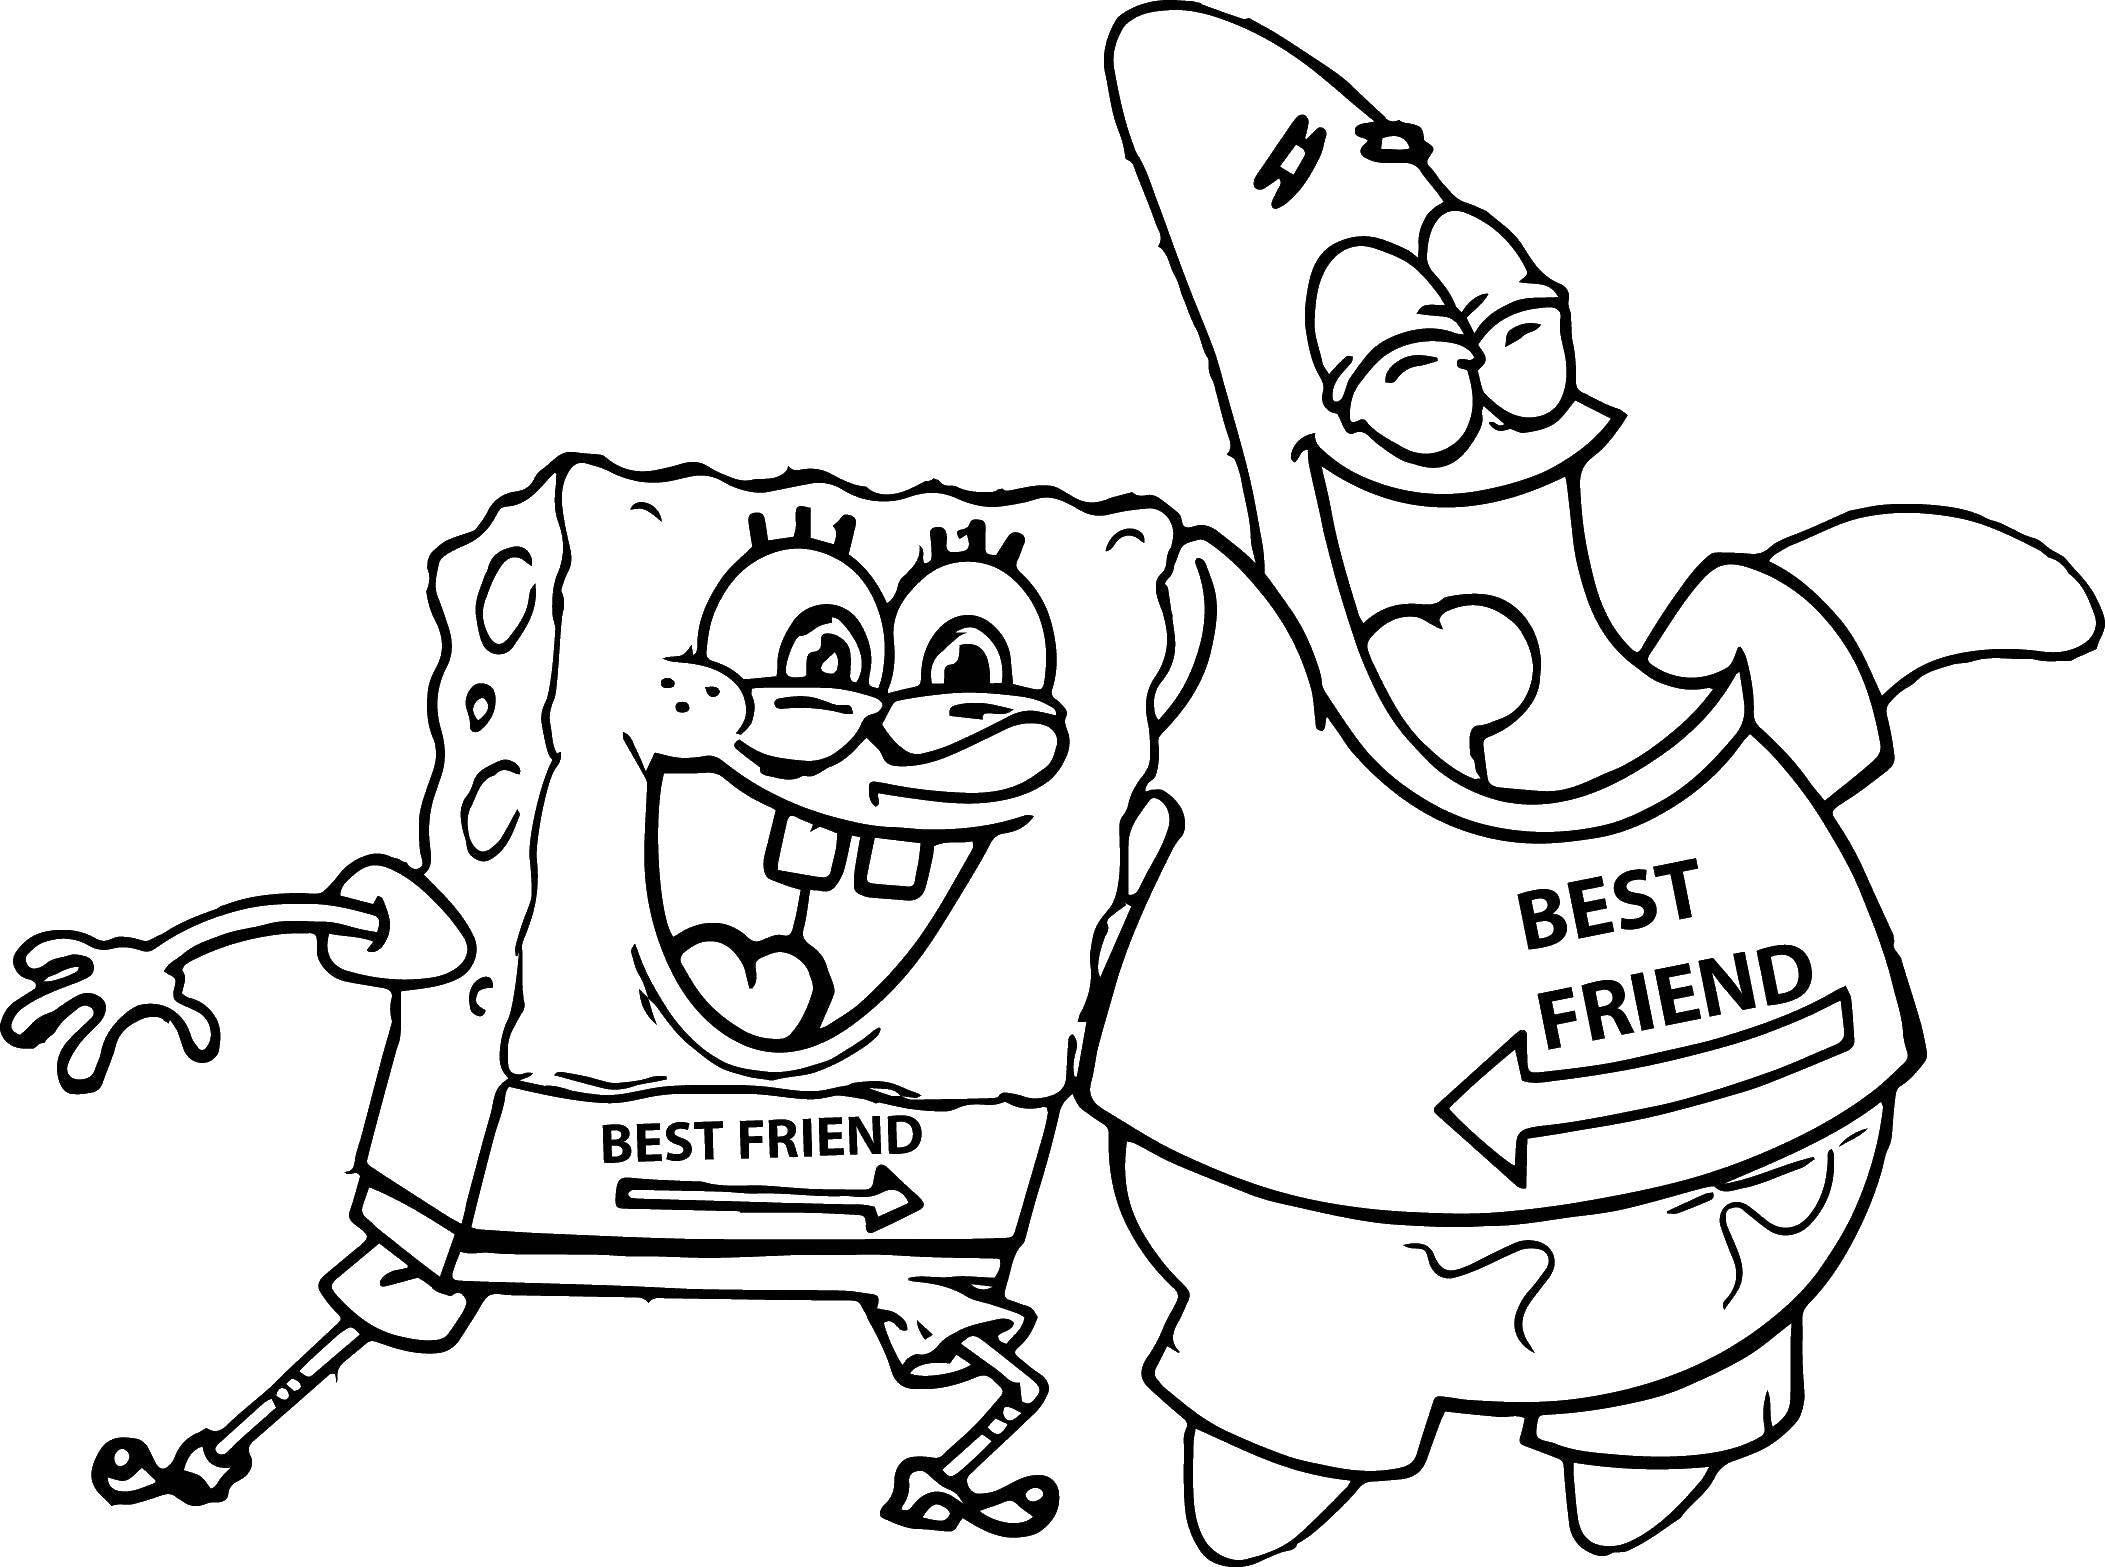 Coloring Spongebob and Patrick best friends. Category Spongebob. Tags:  the spongebob, Patrick.